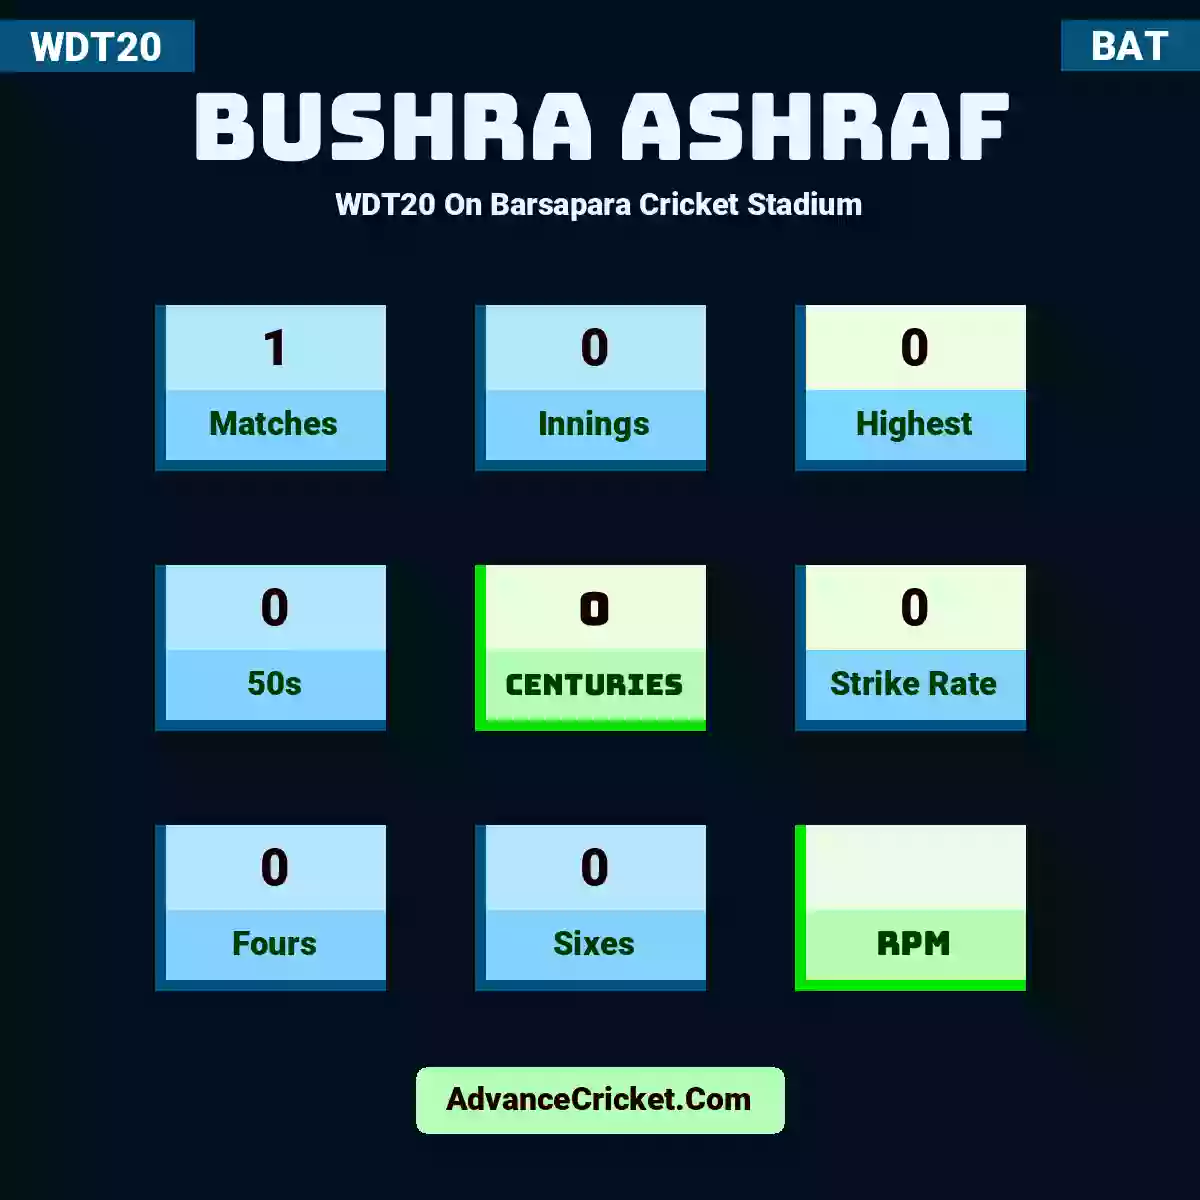 Bushra Ashraf WDT20  On Barsapara Cricket Stadium, Bushra Ashraf played 1 matches, scored 0 runs as highest, 0 half-centuries, and 0 centuries, with a strike rate of 0. B.Ashraf hit 0 fours and 0 sixes.